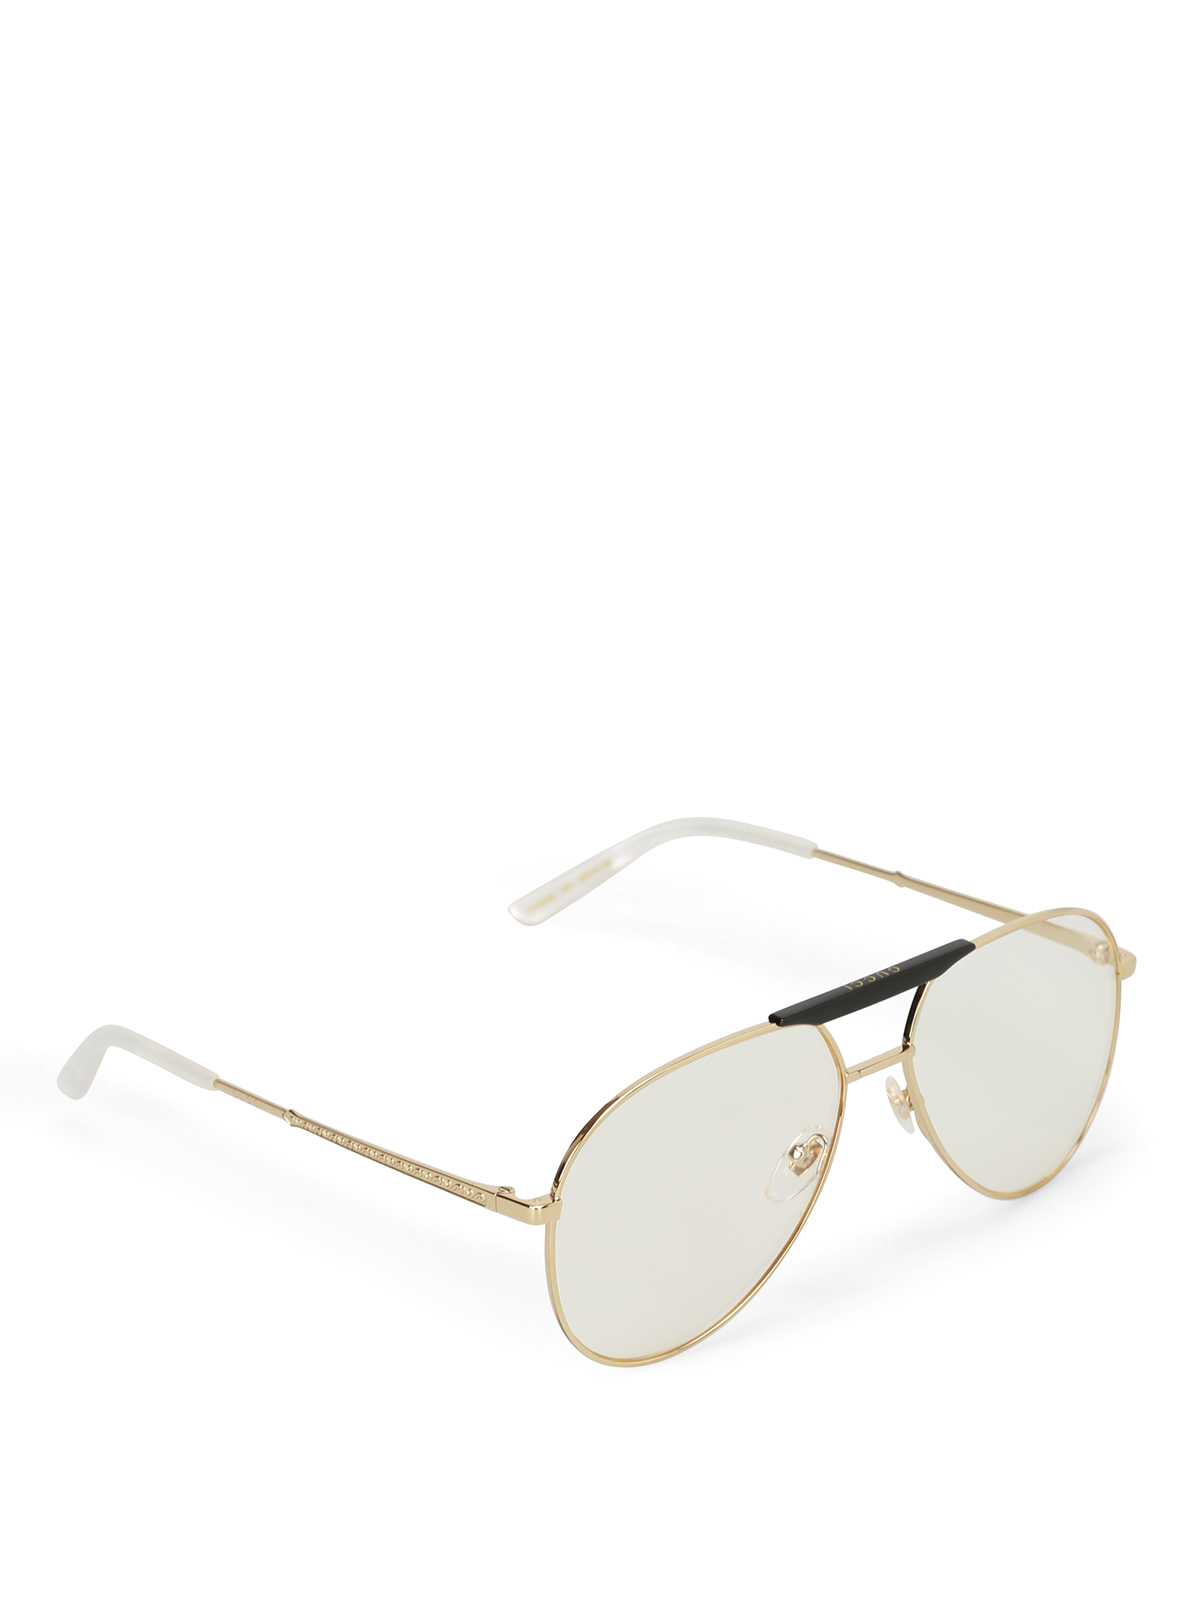 gucci gold tone aviator sunglasses